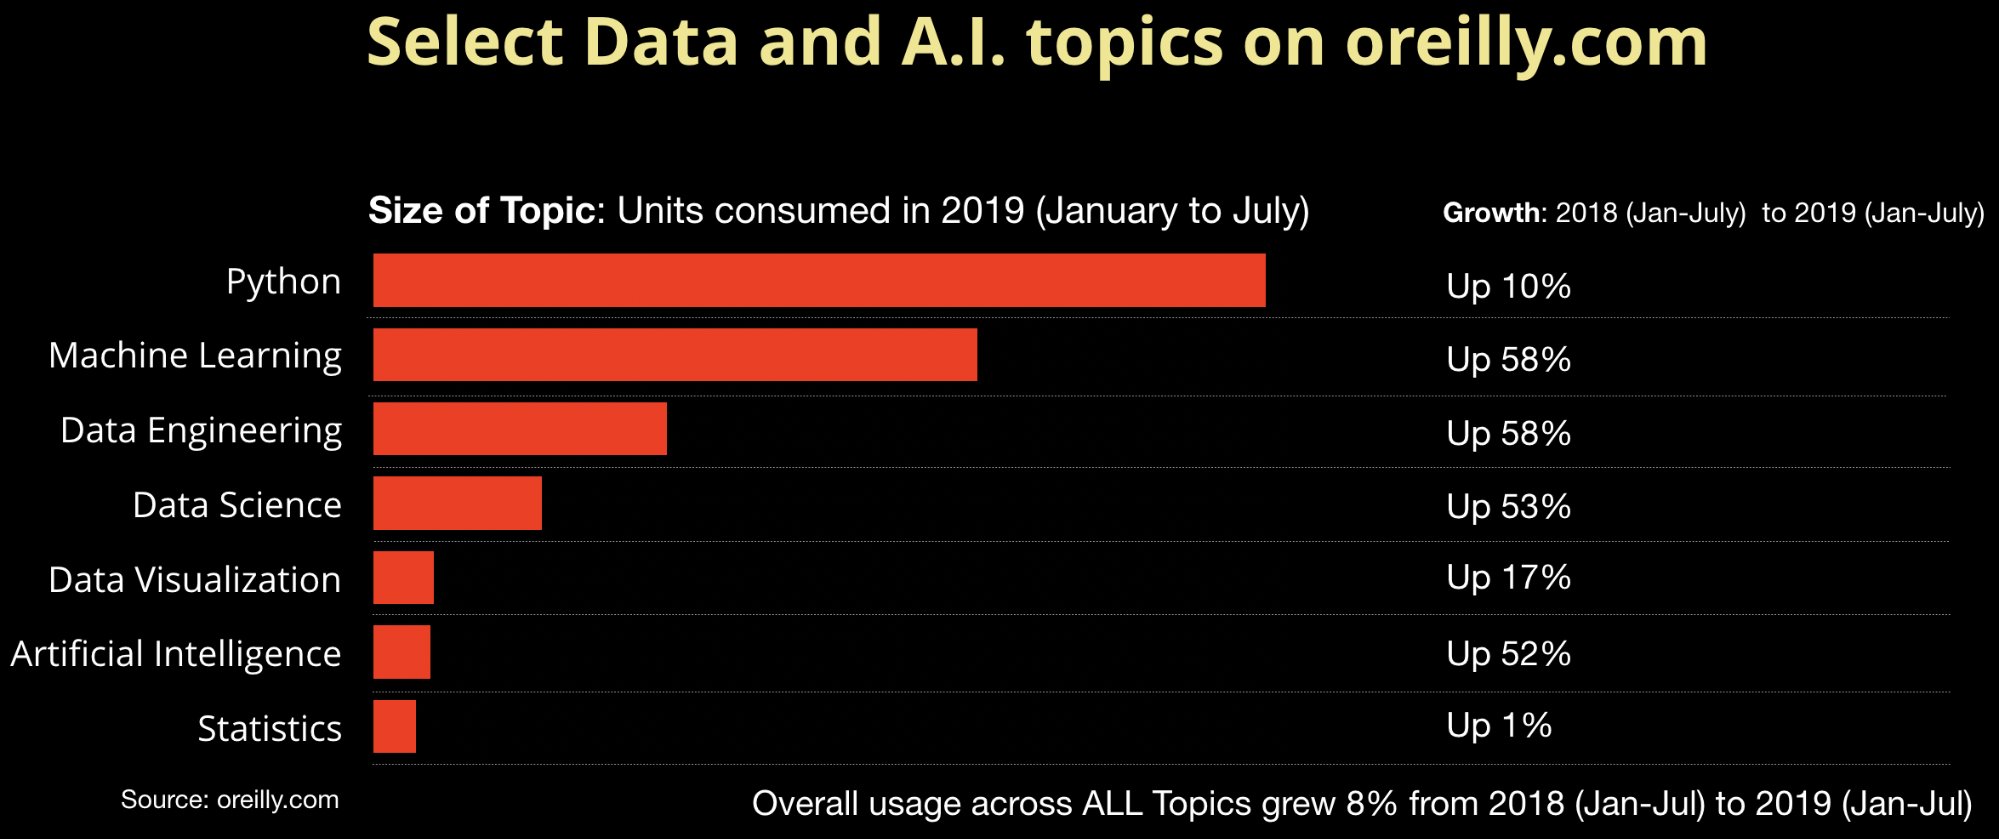 AI and Data topics on oreilly.com